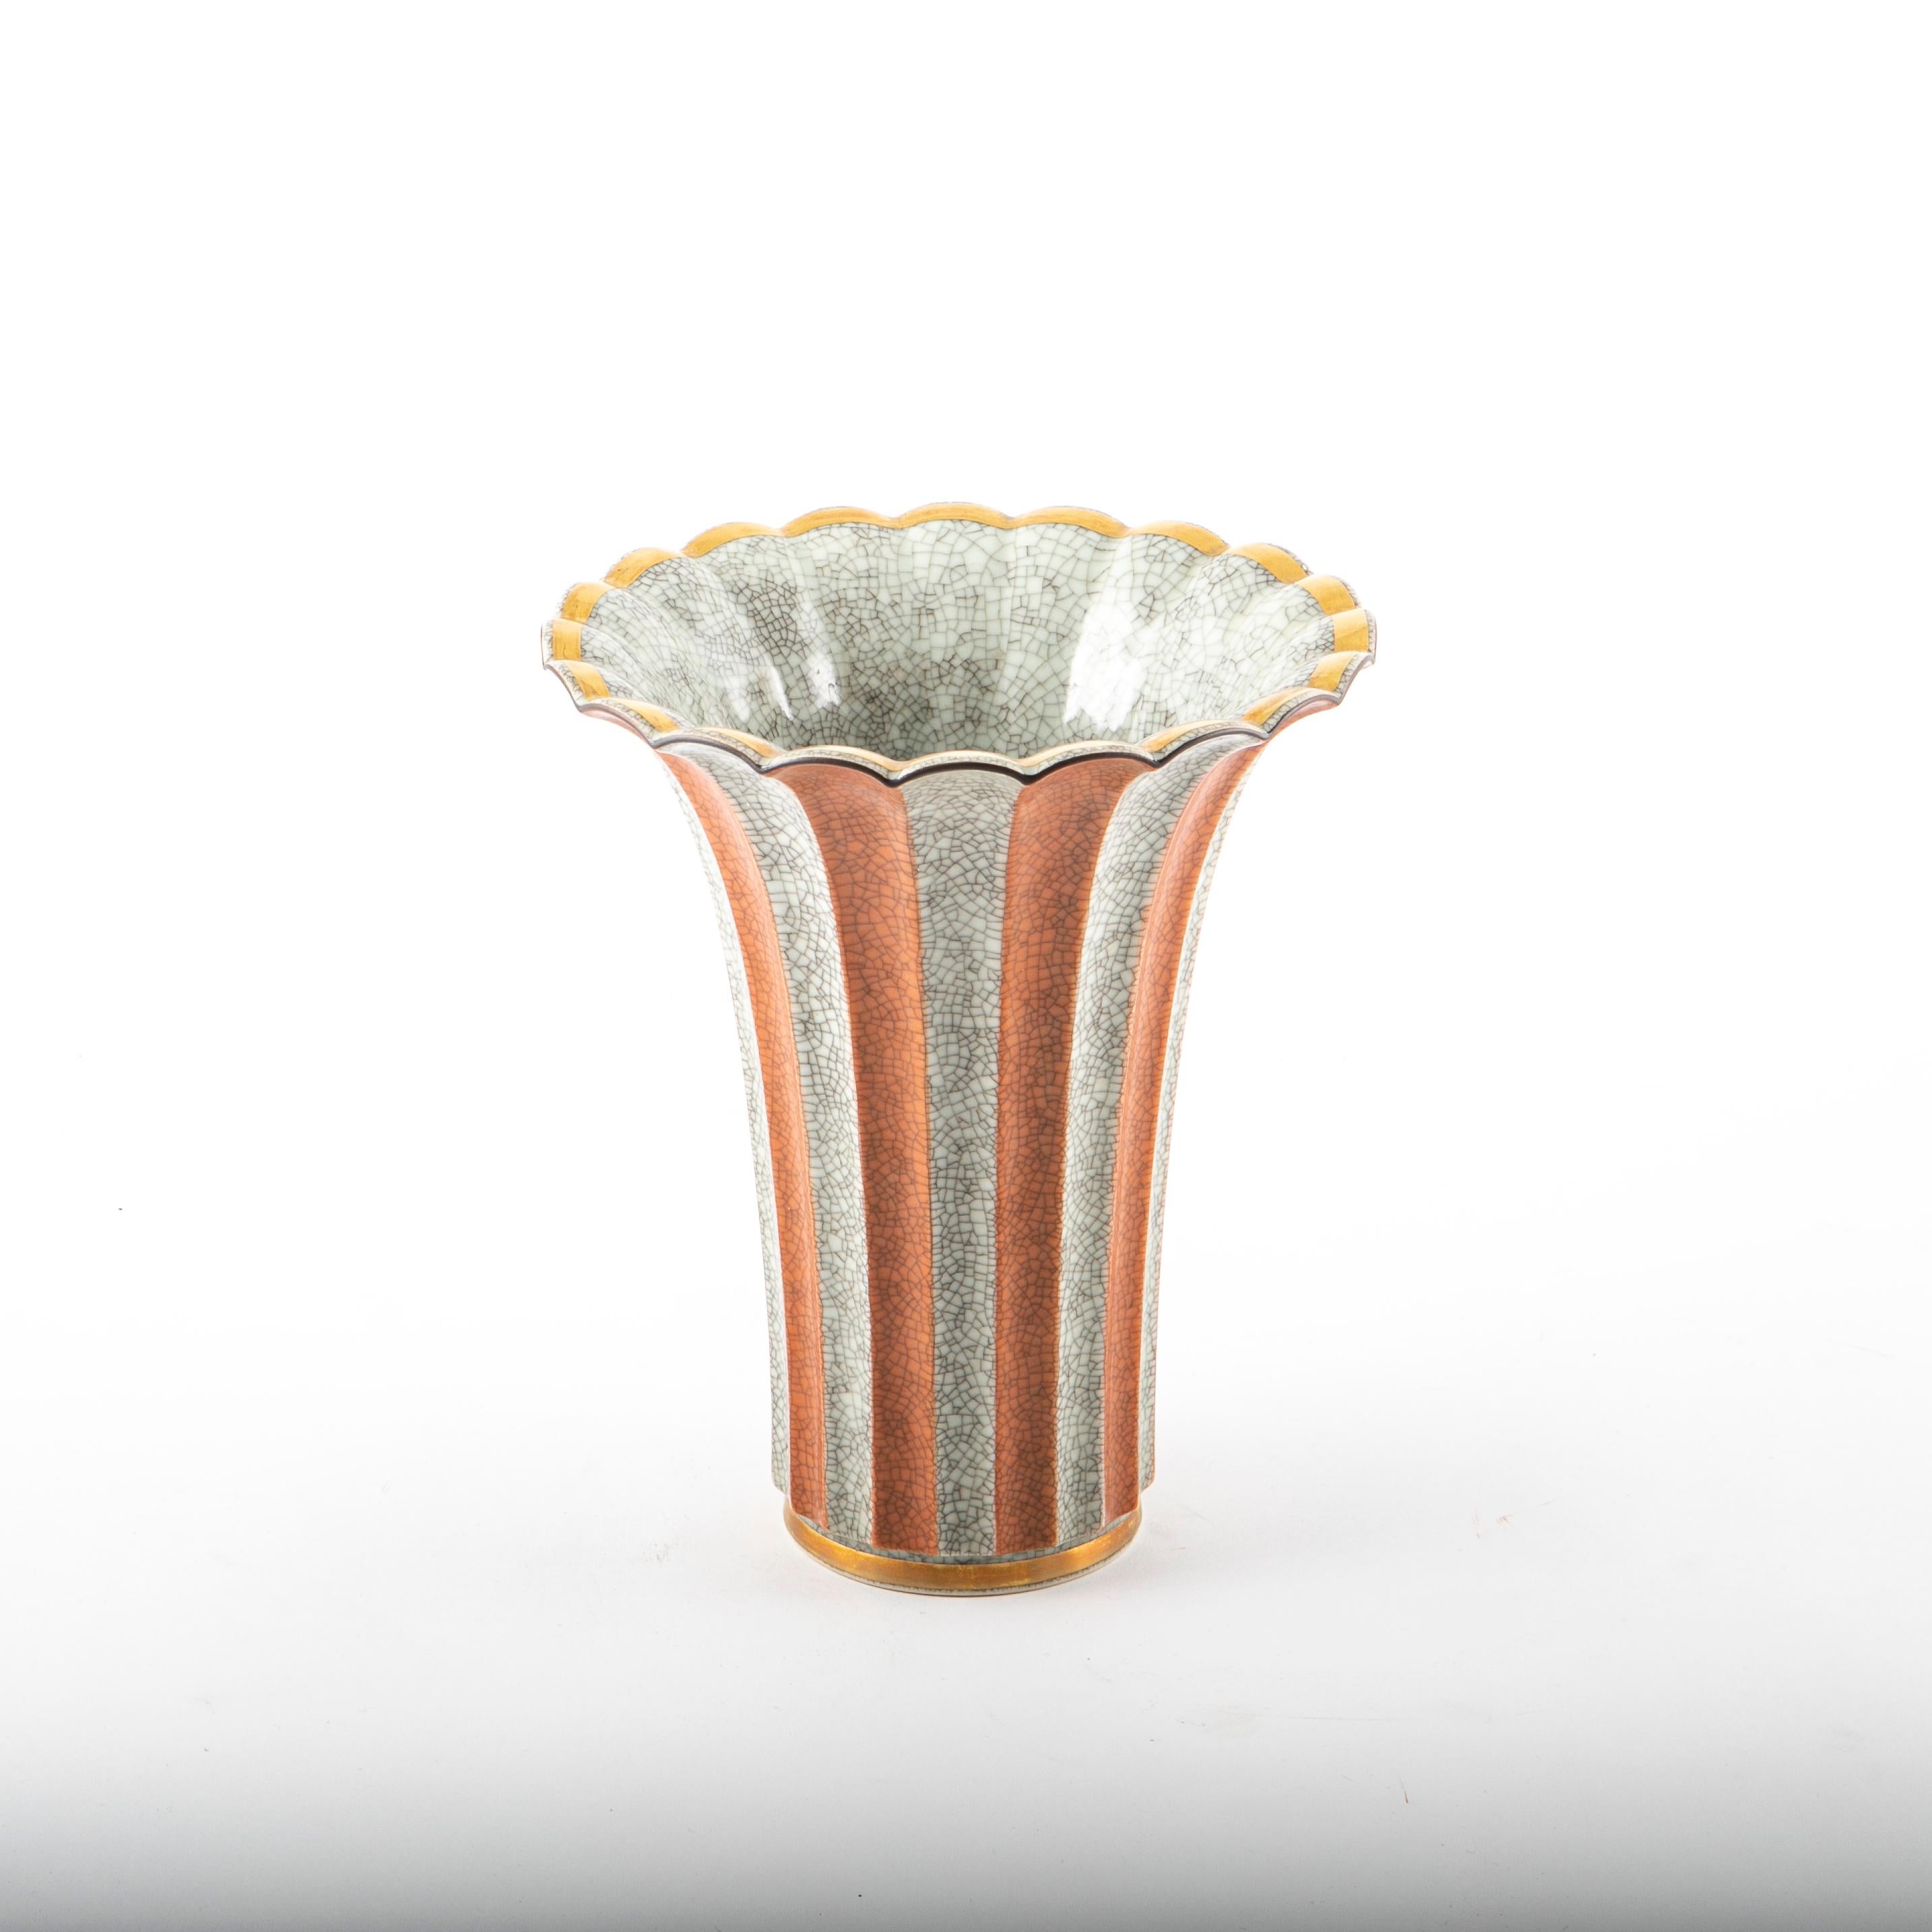 Royal Copenhagen crackle porcelain vase with scalloped rim.
Orange and grey striped crackle glaze with gold decorative trim.
Hetch style.

Marks on base.
In excellent condition.
Copenhagen, Denmark 1950s.